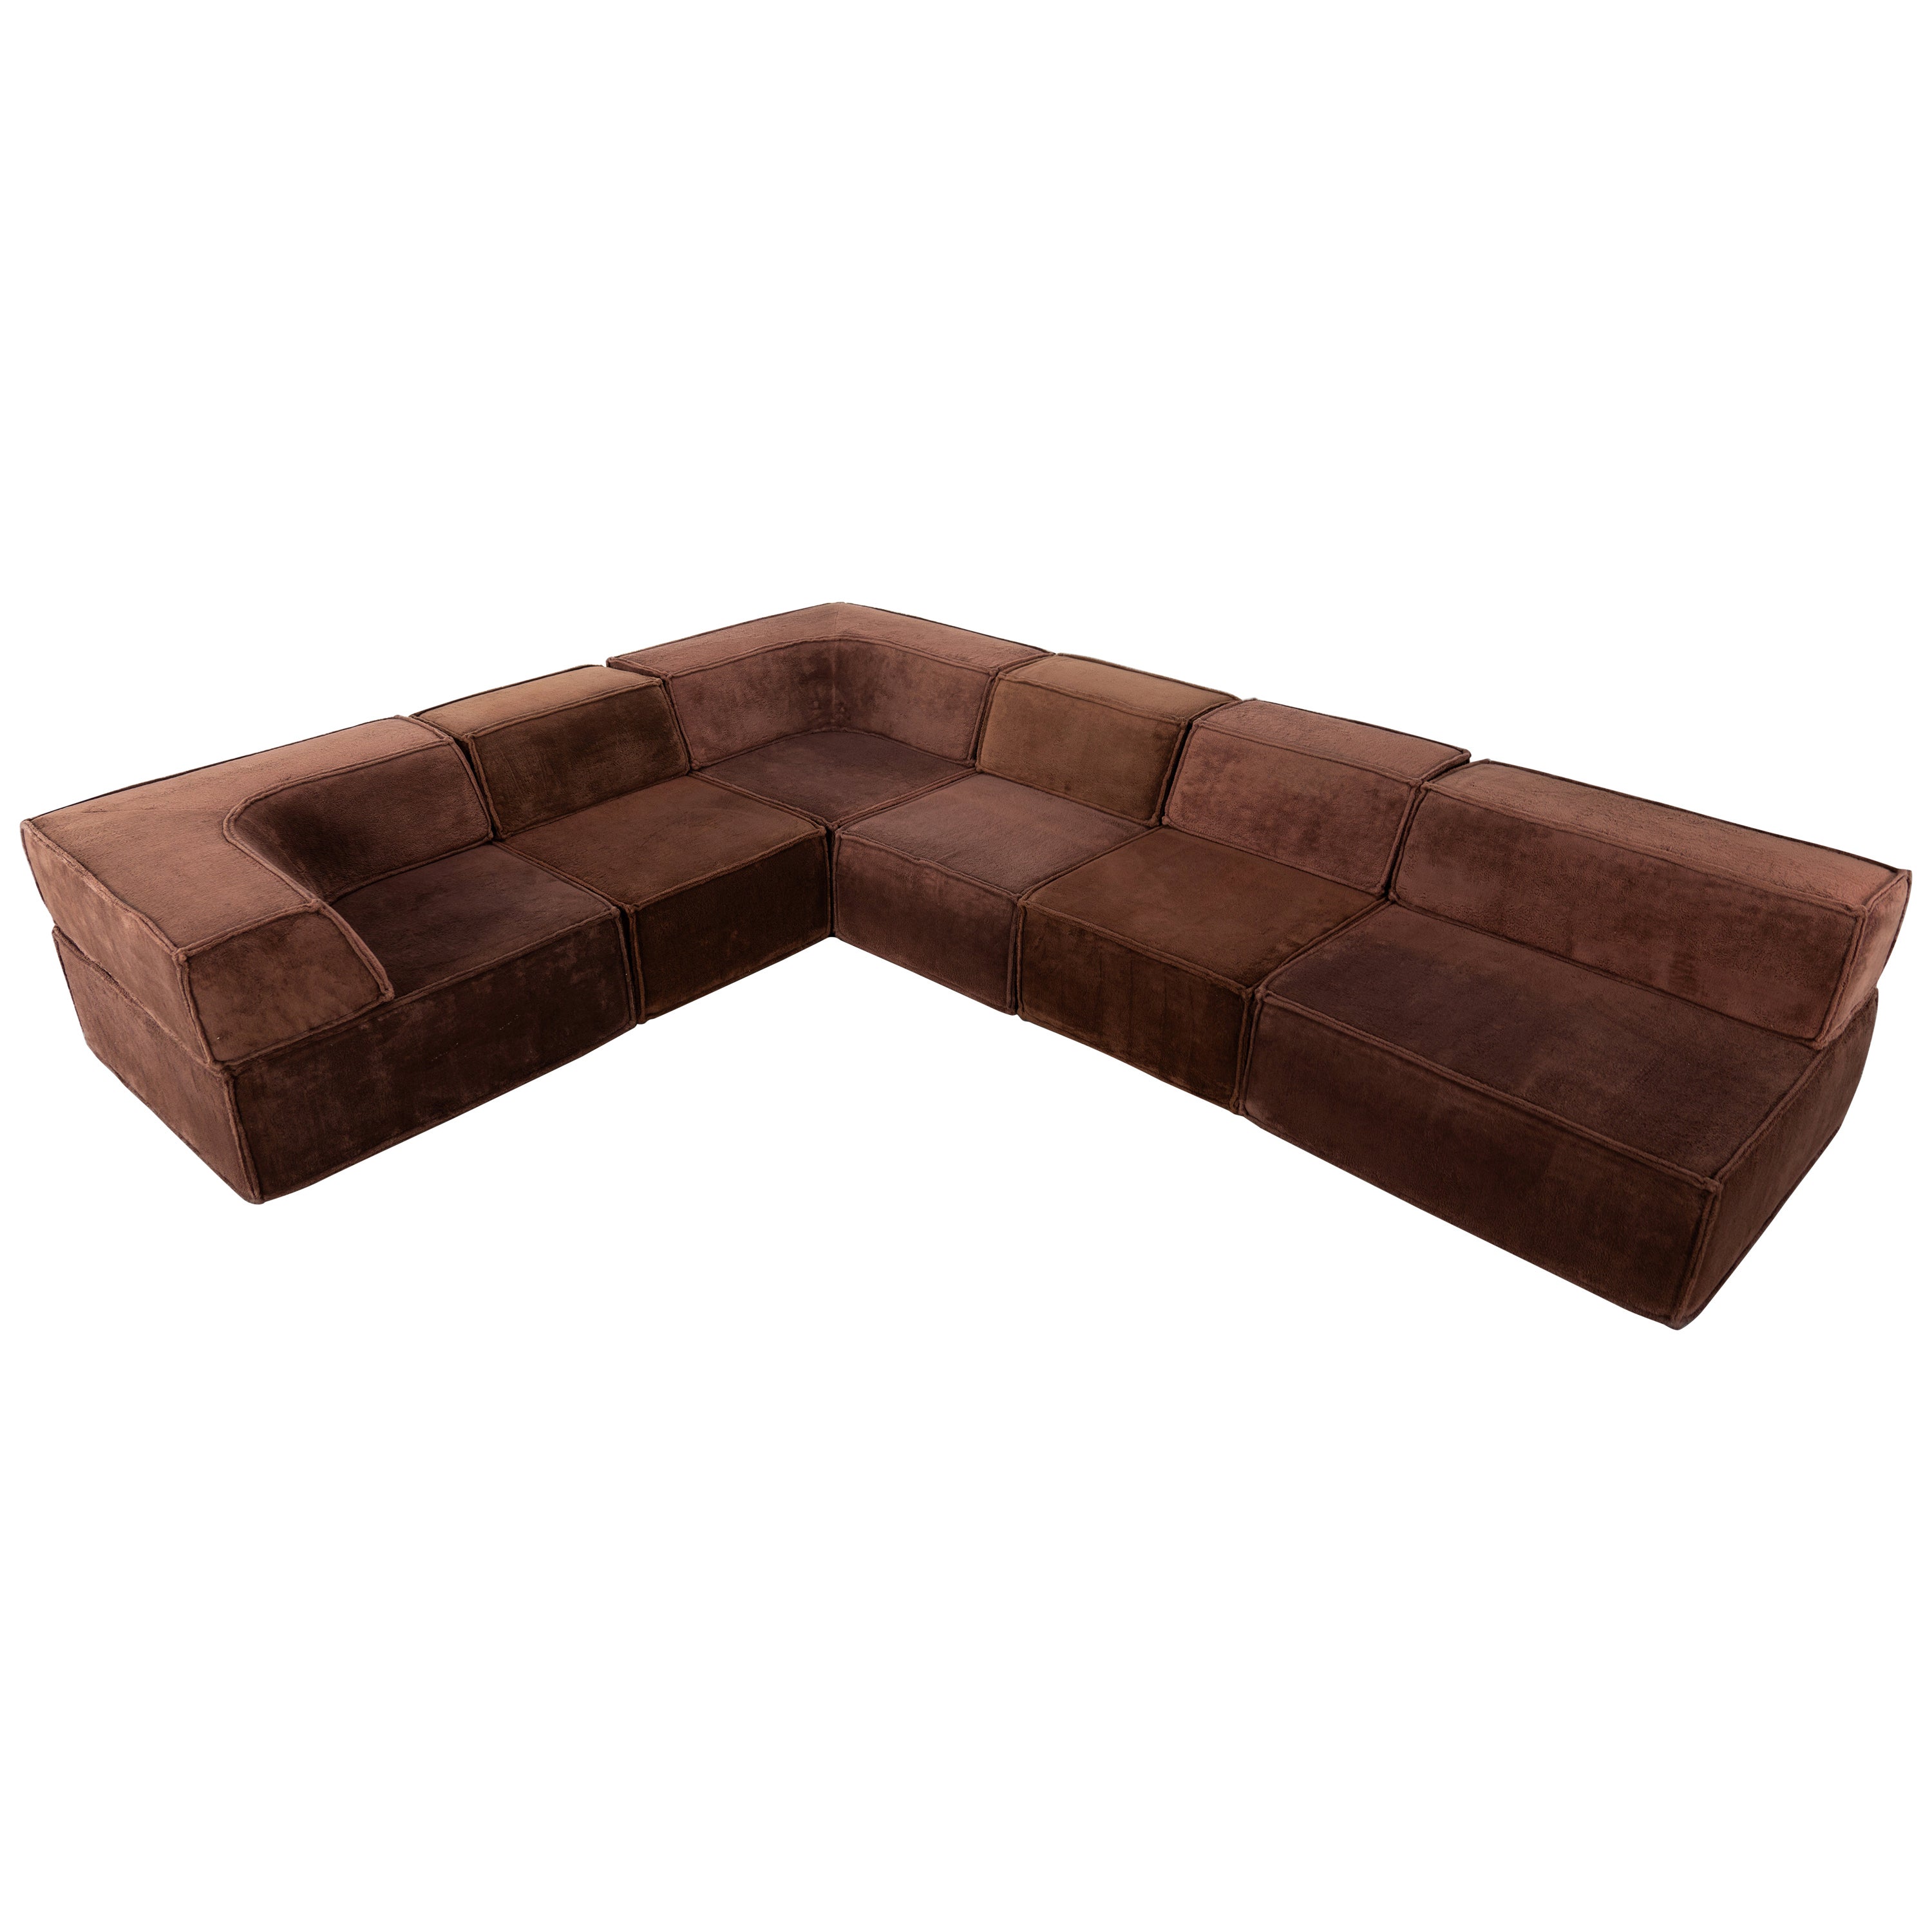 COR Trio Modular Sofa, Giant Landscape in chocolate Teddy - 1972 by Team Form AG